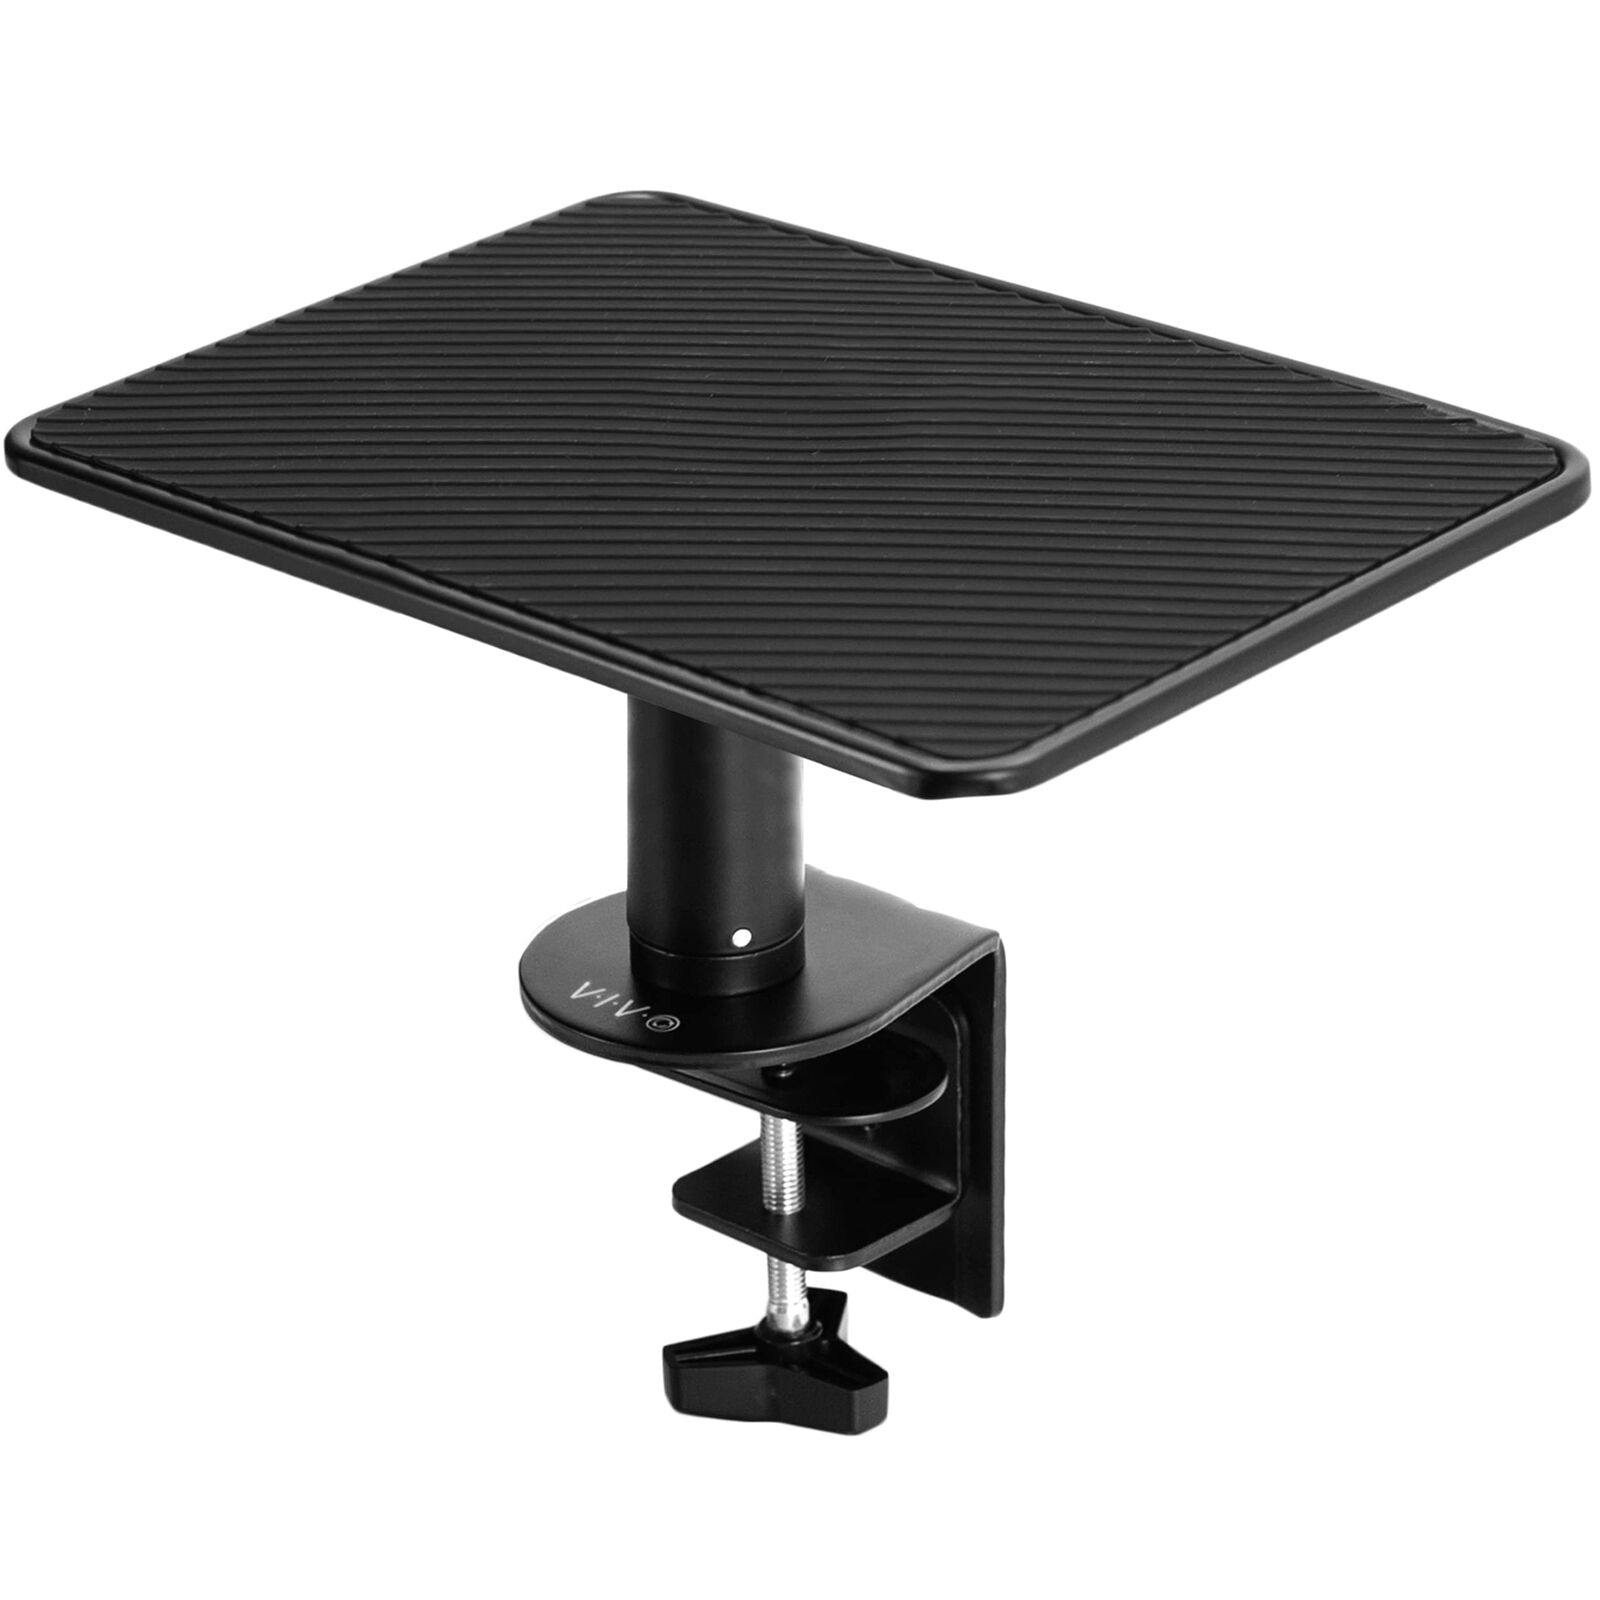 VIVO Clamp-On Universal Height Adjustable Ergonomic Computer Monitor and Laptop